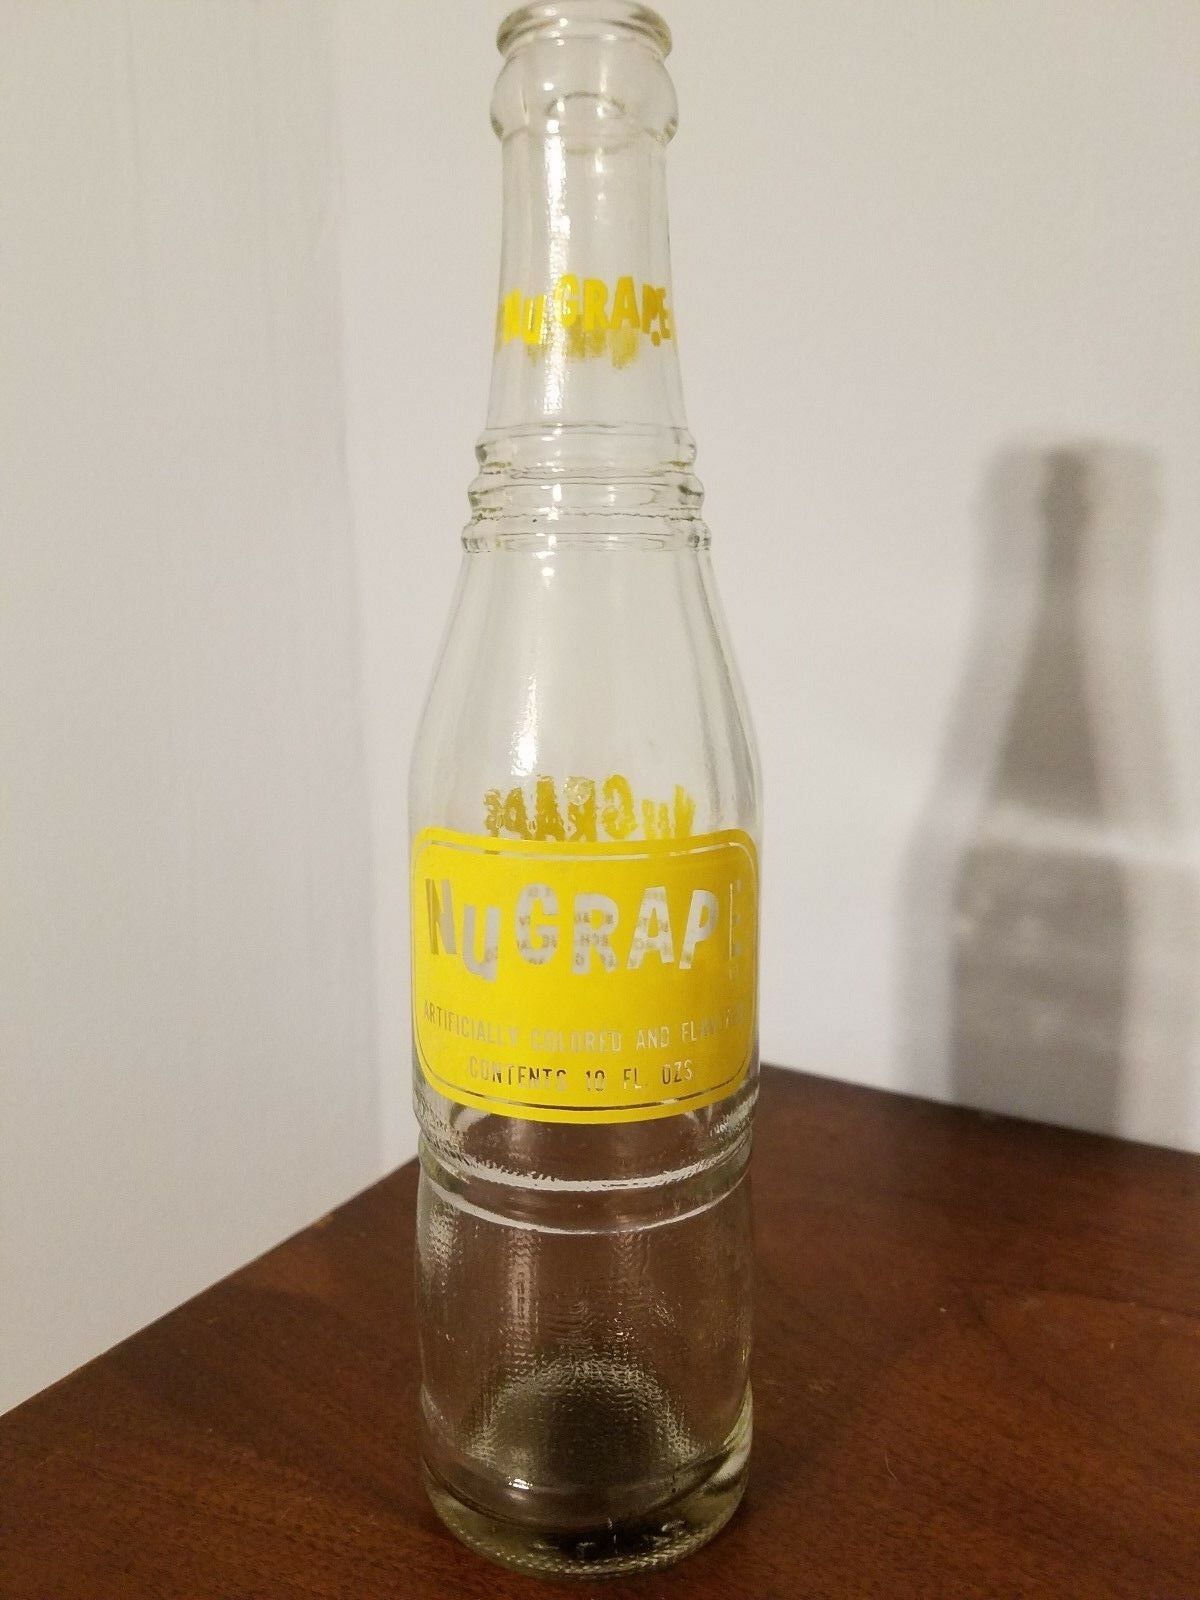 Vintage Nugrape Moxie Monarch Doraville, Georgia 10 Oz Glass Acl Soda Pop Bottle